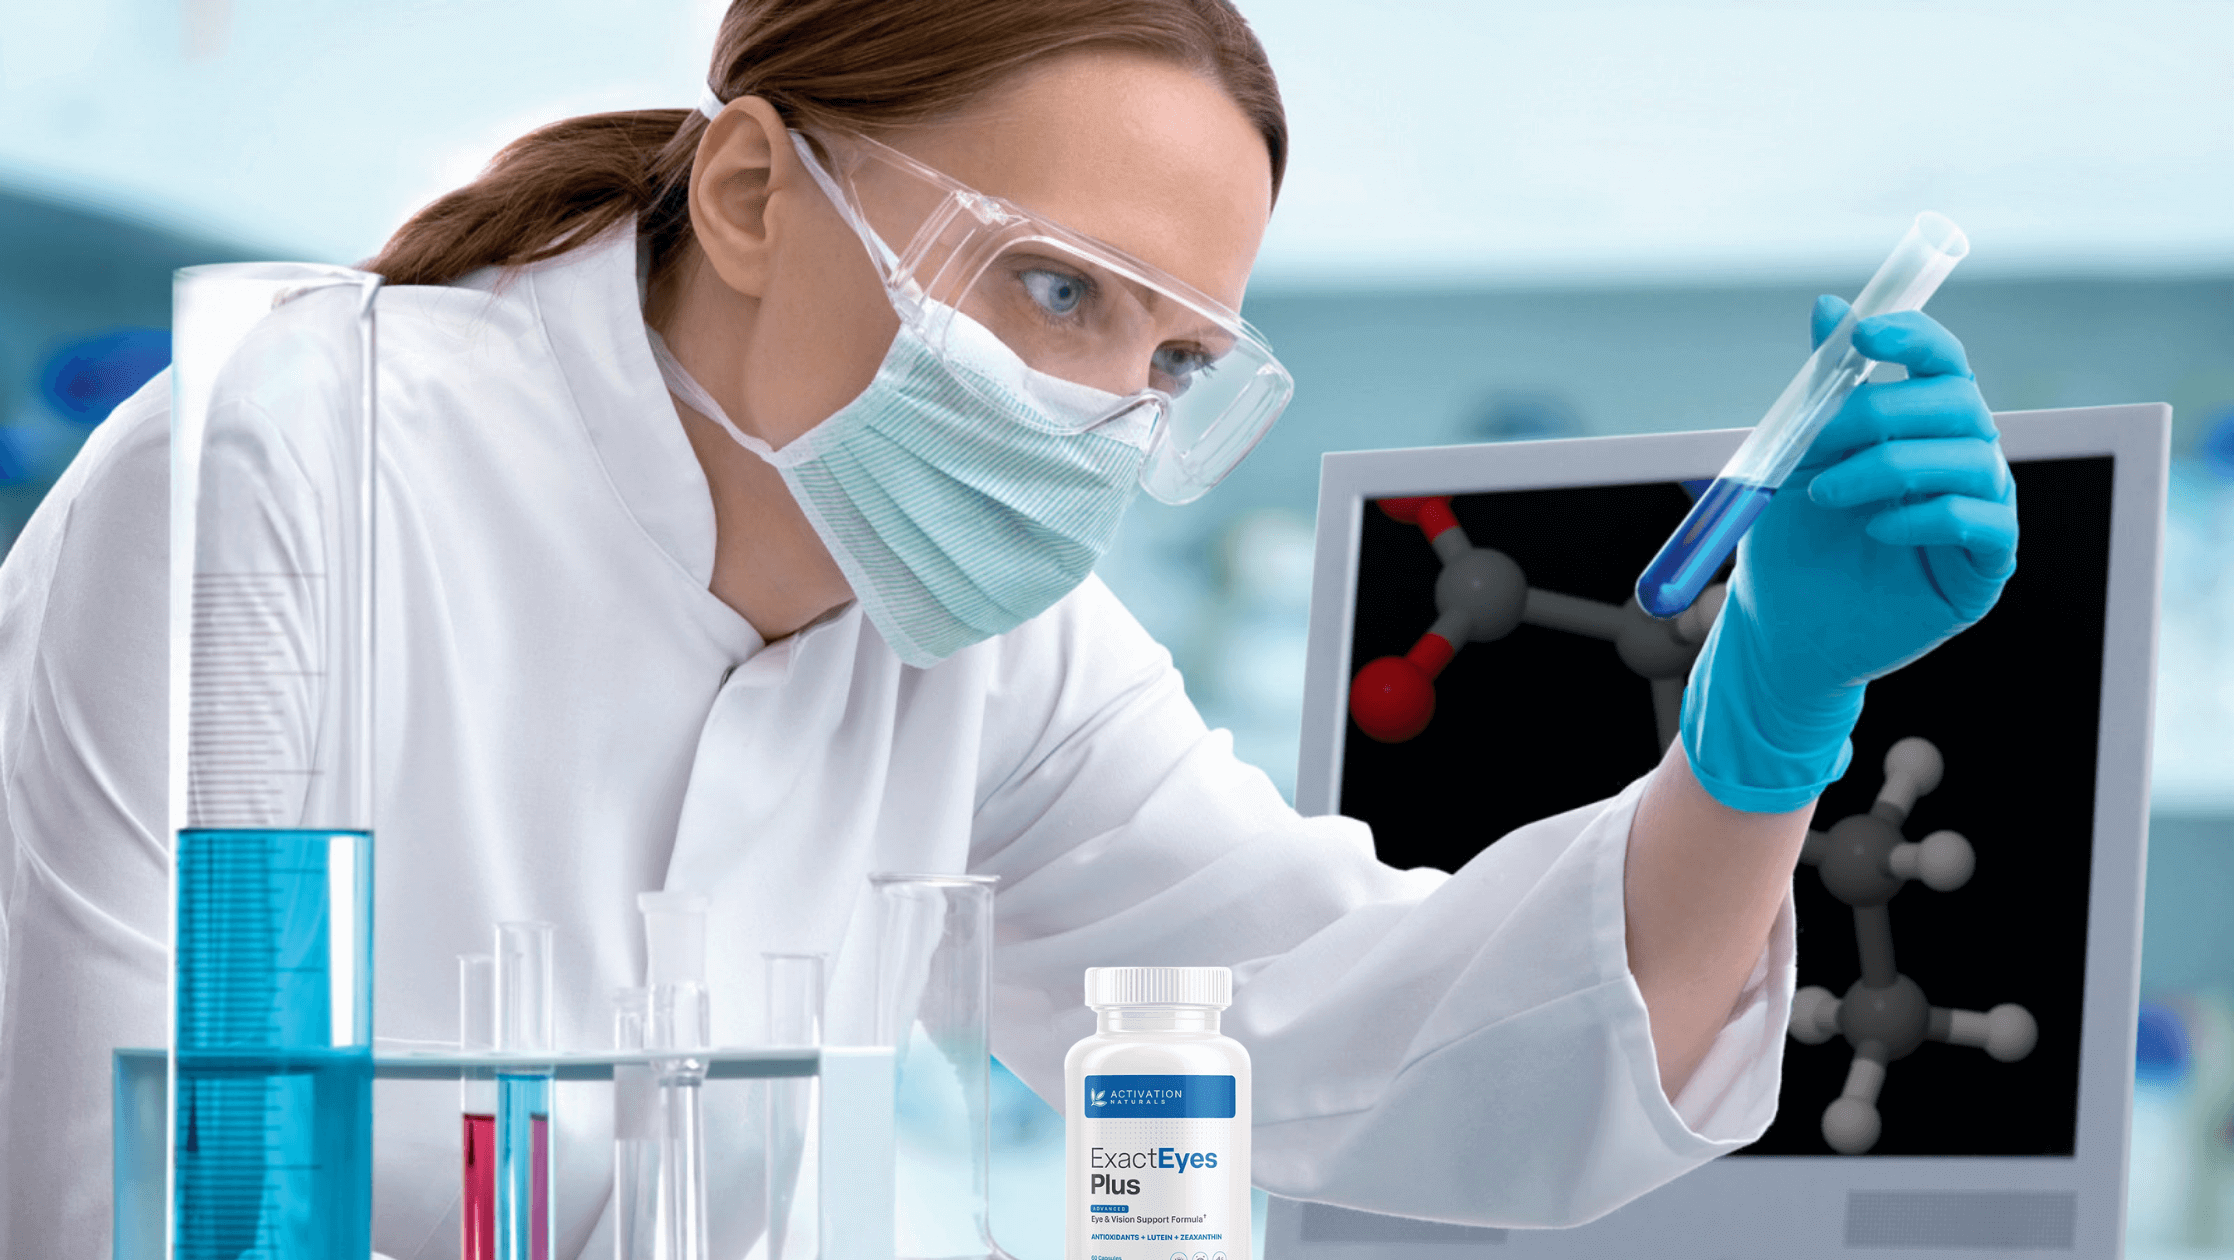 ExactEyes Plus Supplement Laboratory Testing